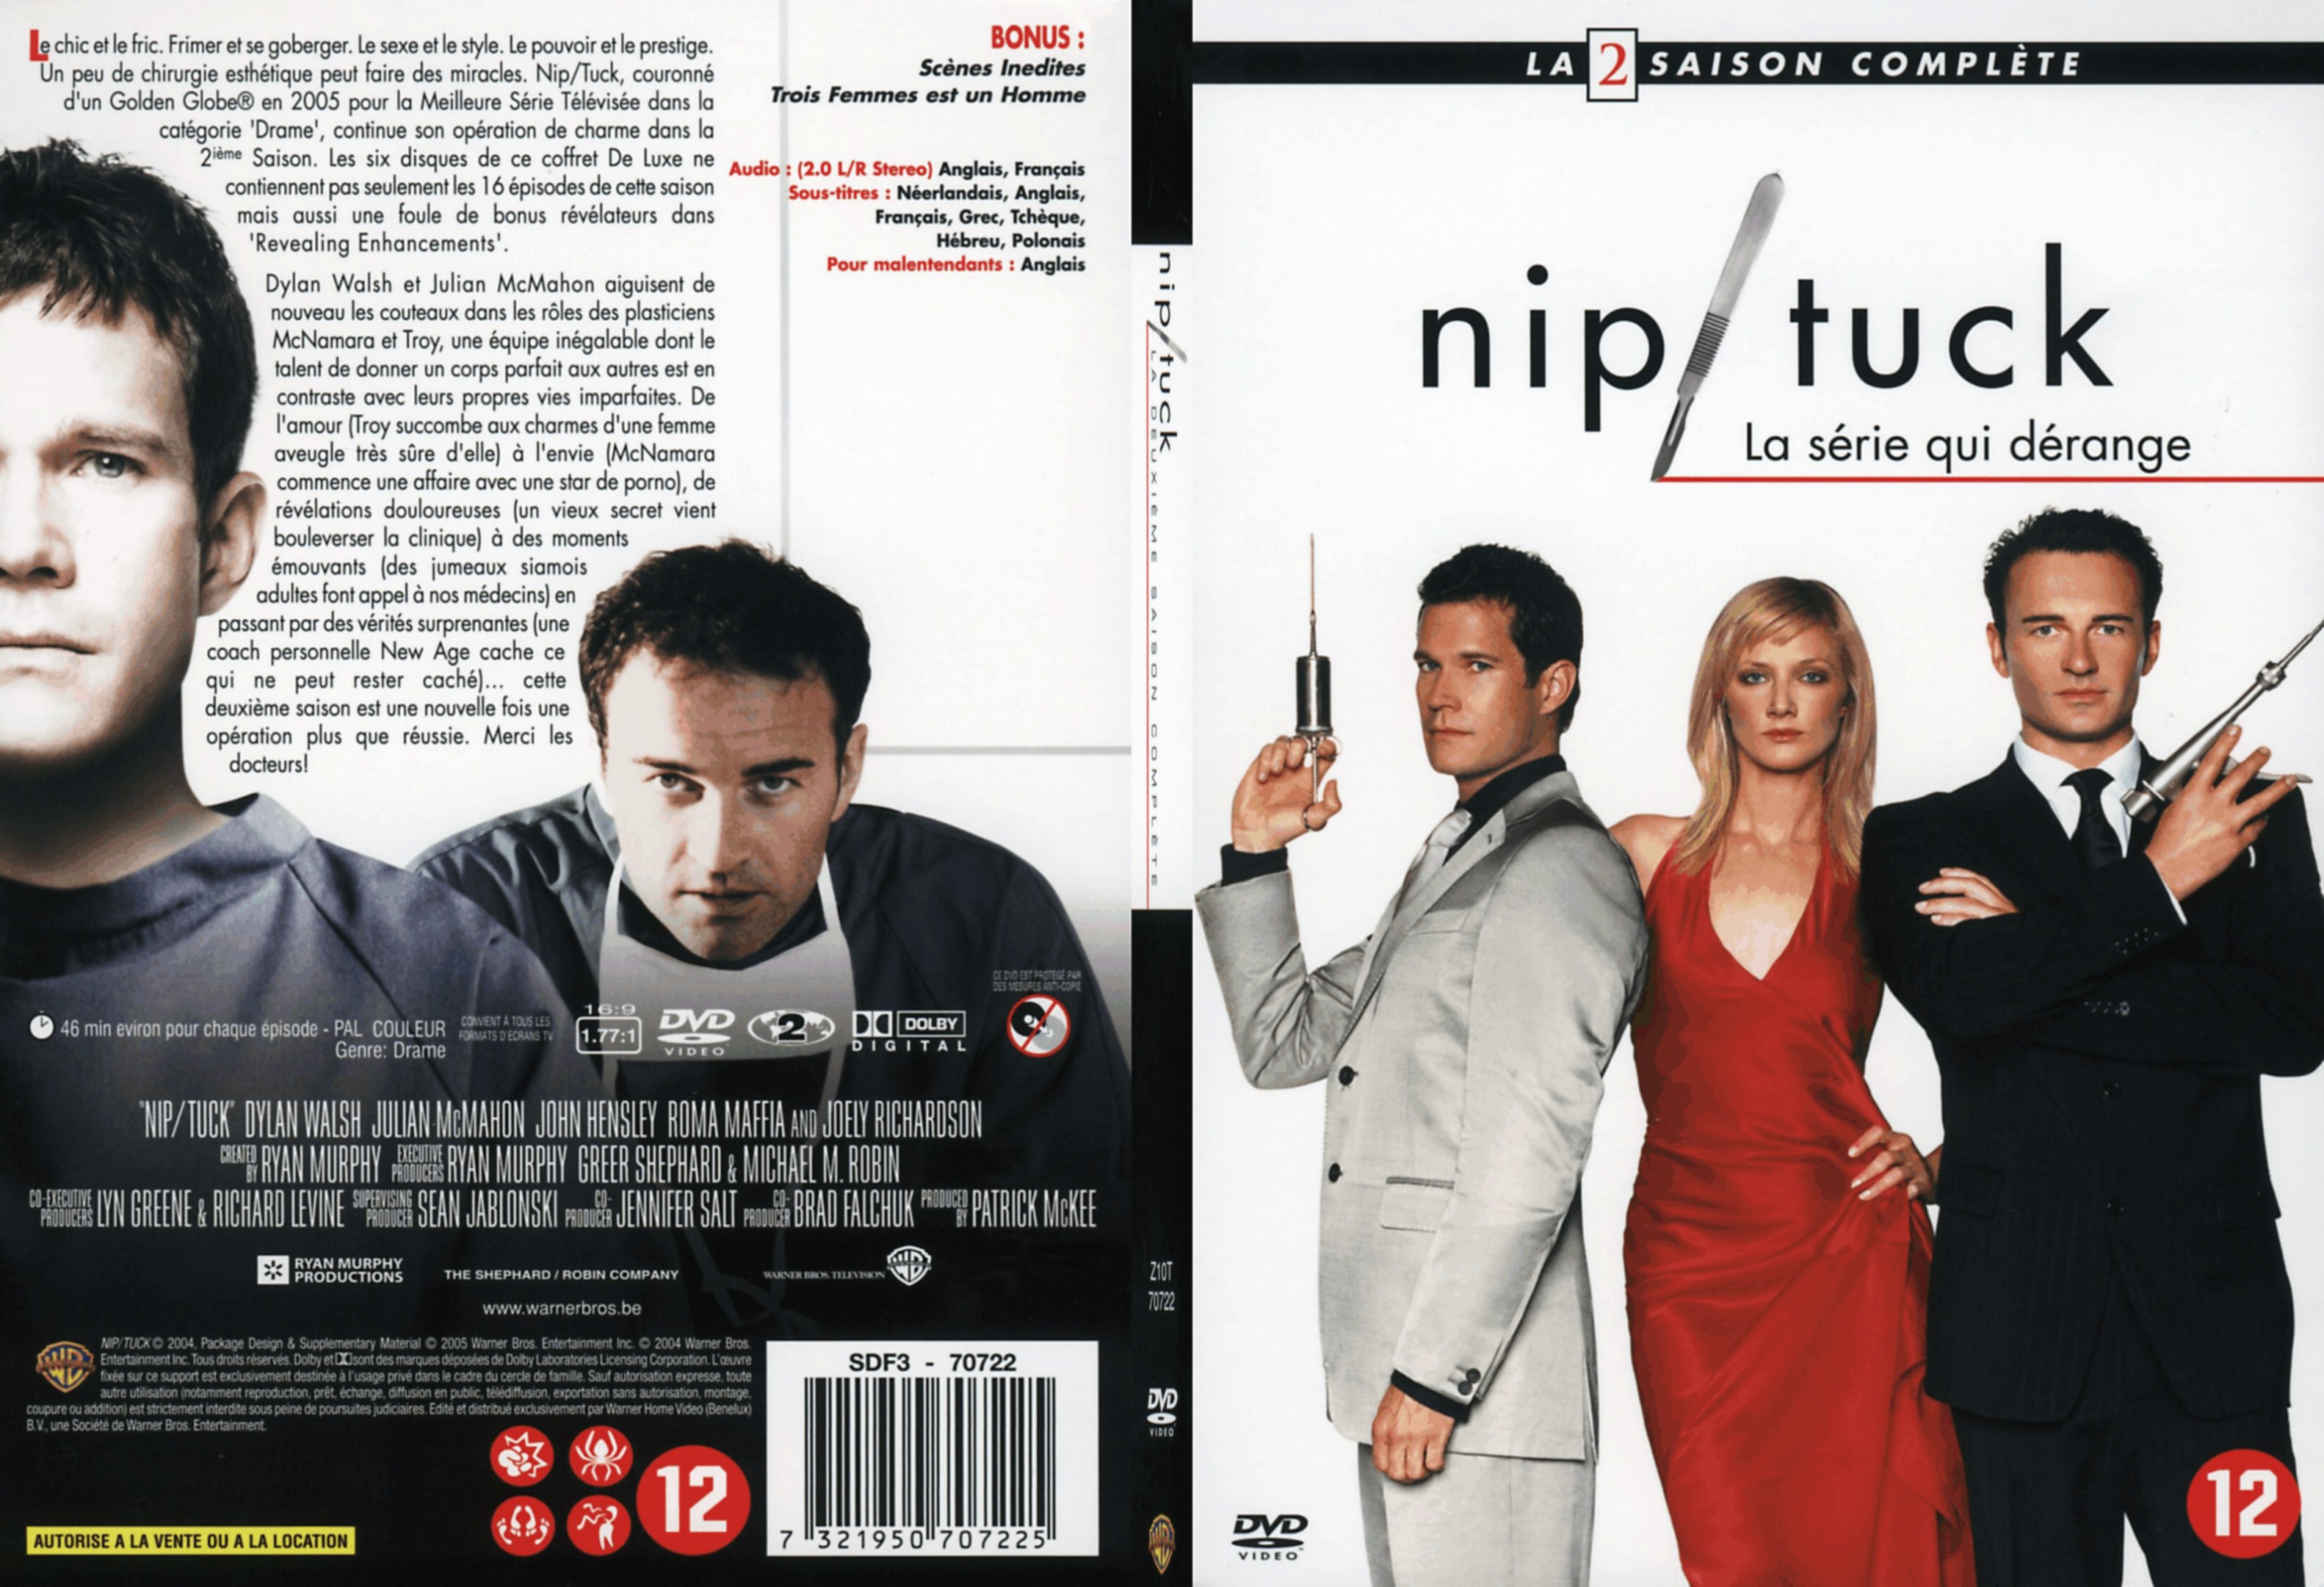 Jaquette DVD Nip-Tuck saison 2 COFFRET - SLIM